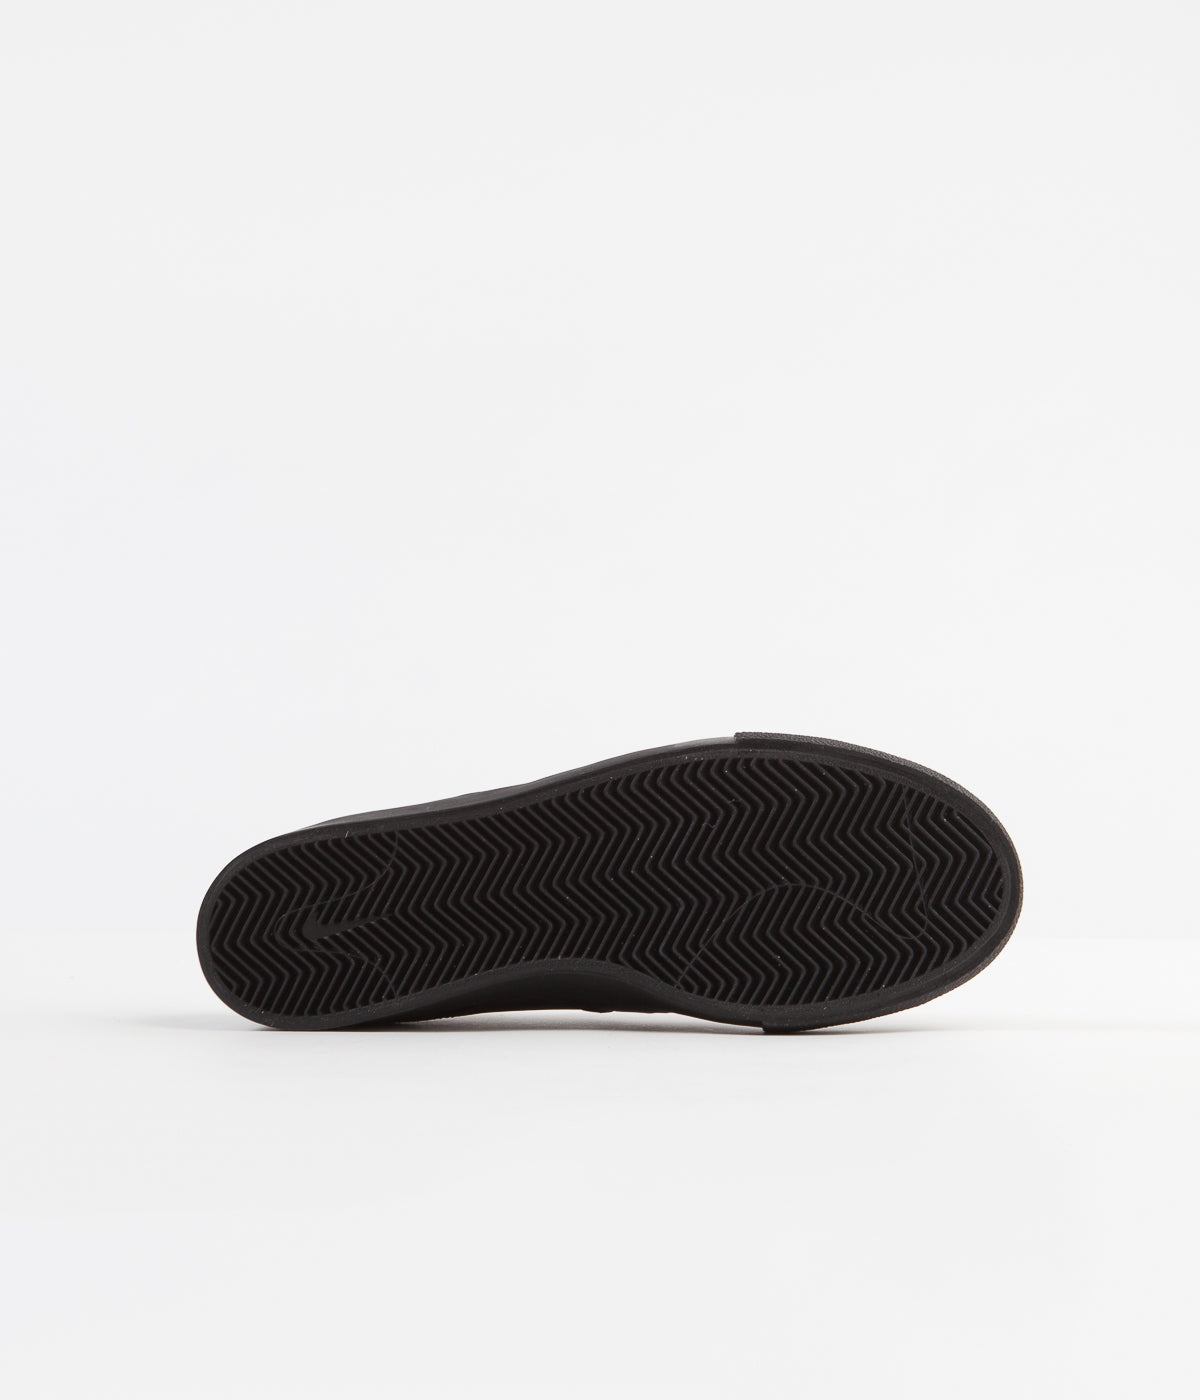 Nike SB Janoski Slip On Remastered Crafted Shoes - Black / Black - Bla ...